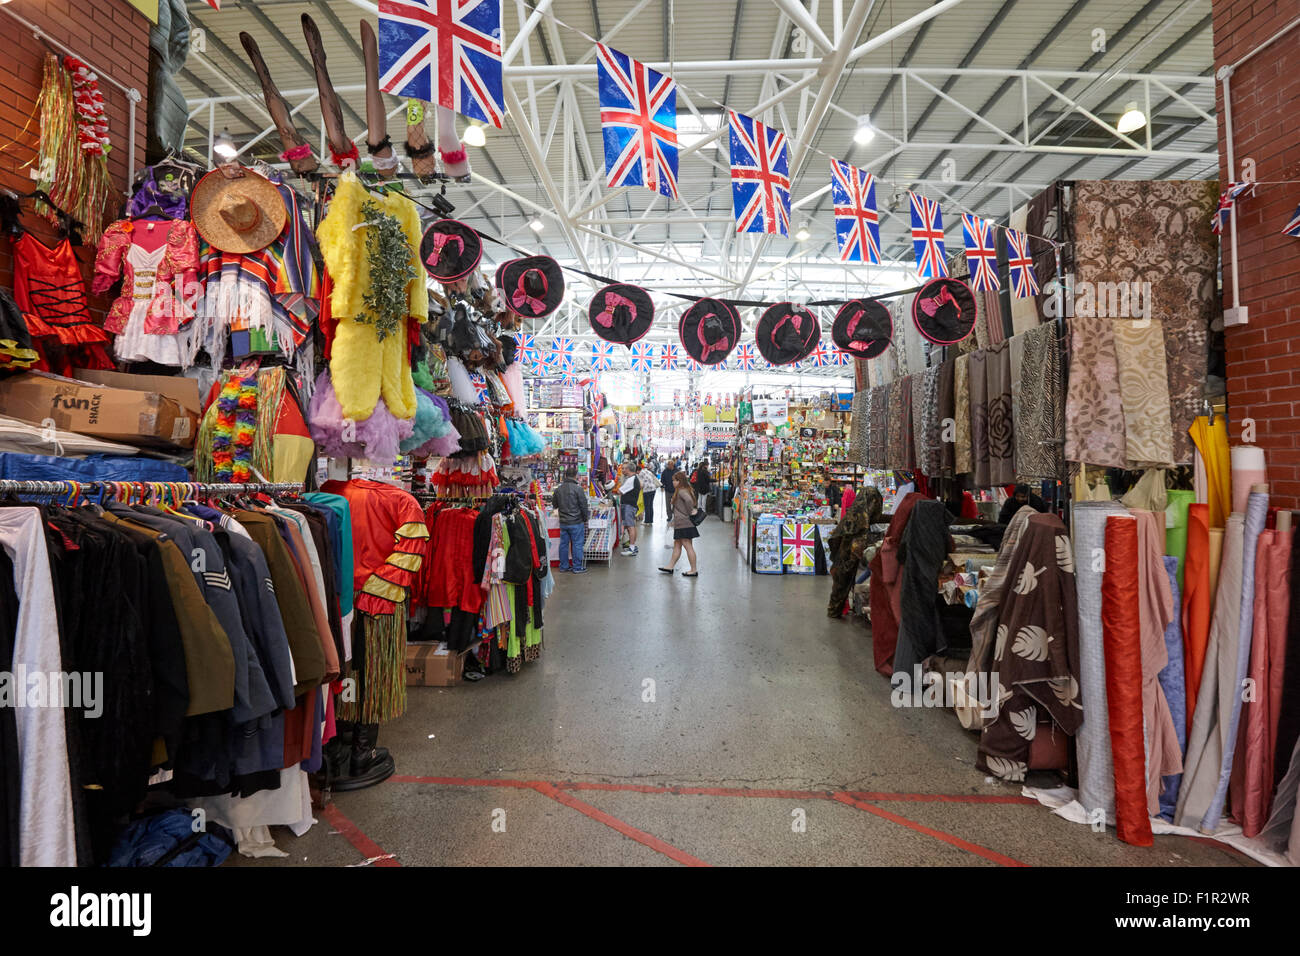 st martins interior of the rag market Birmingham UK Stock Photo